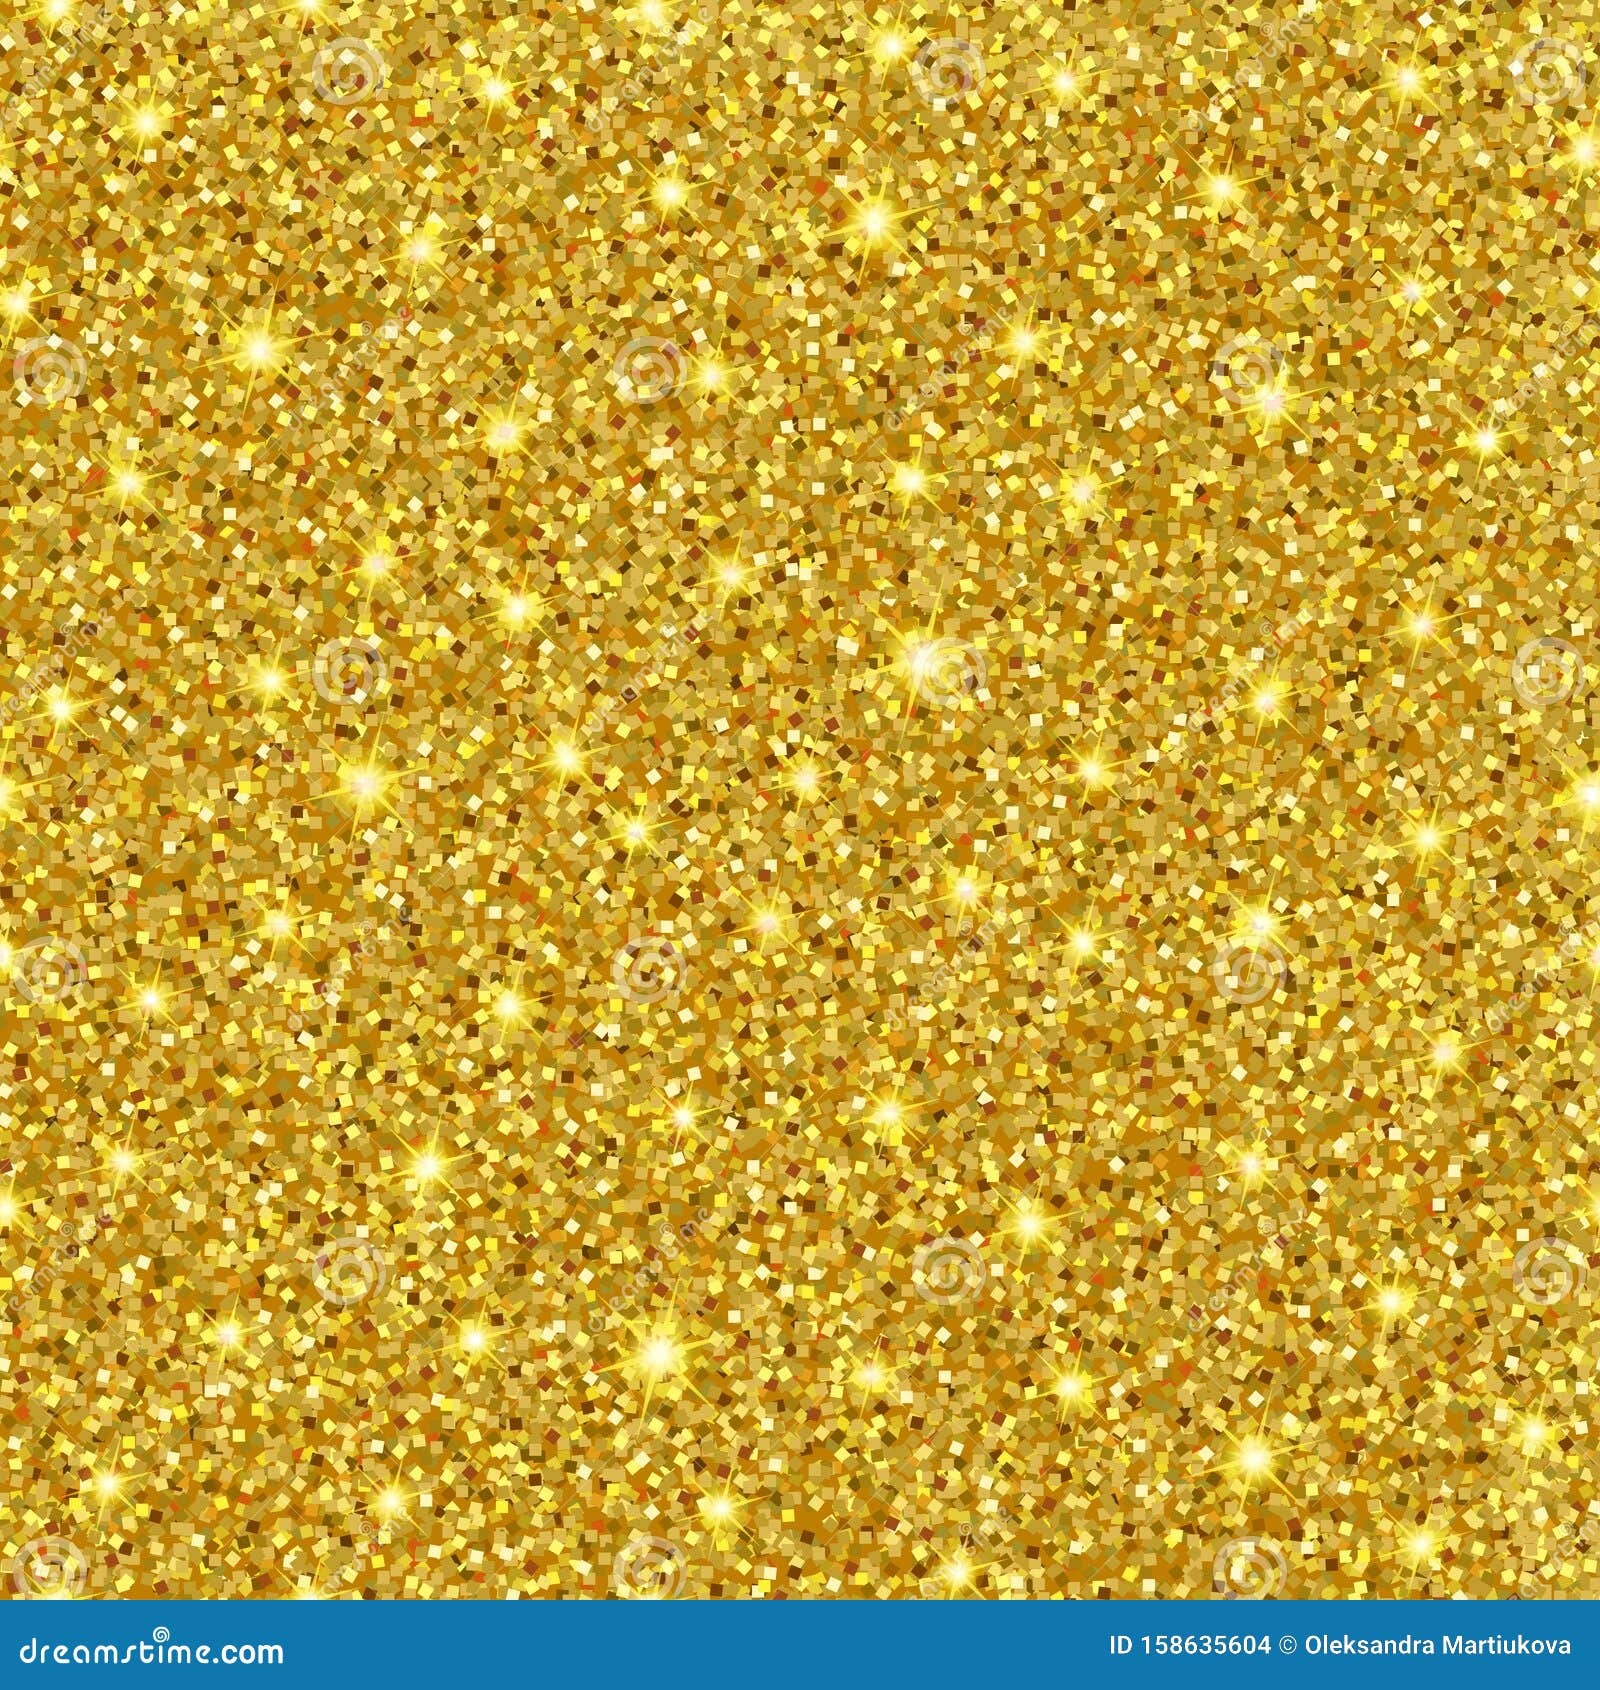 Seamless Vector Gold Glitter Texture Sparkle Luxury Golden Background